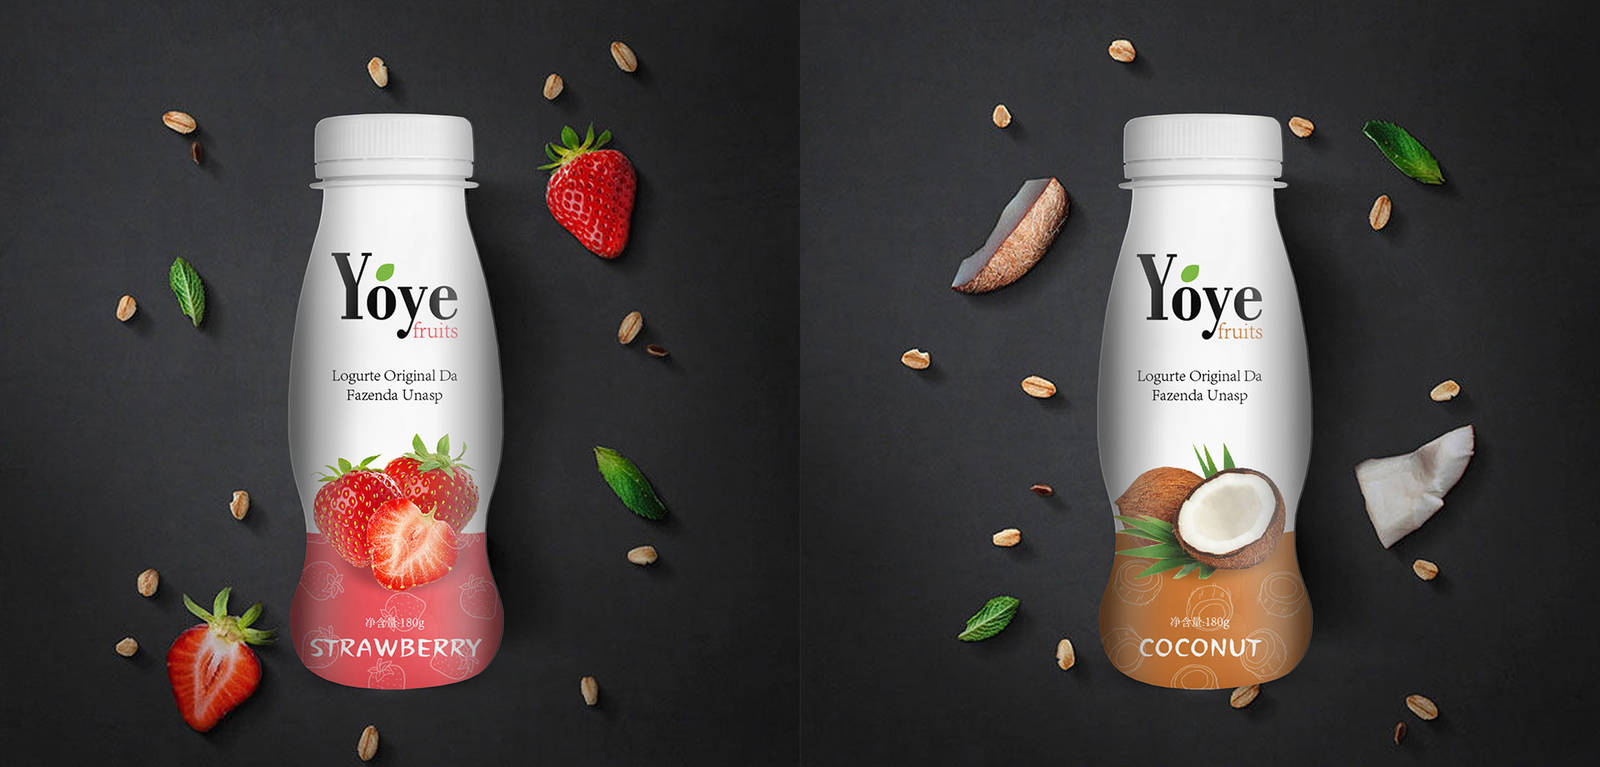 yoye fruits水果饮料瓶装宣传包装